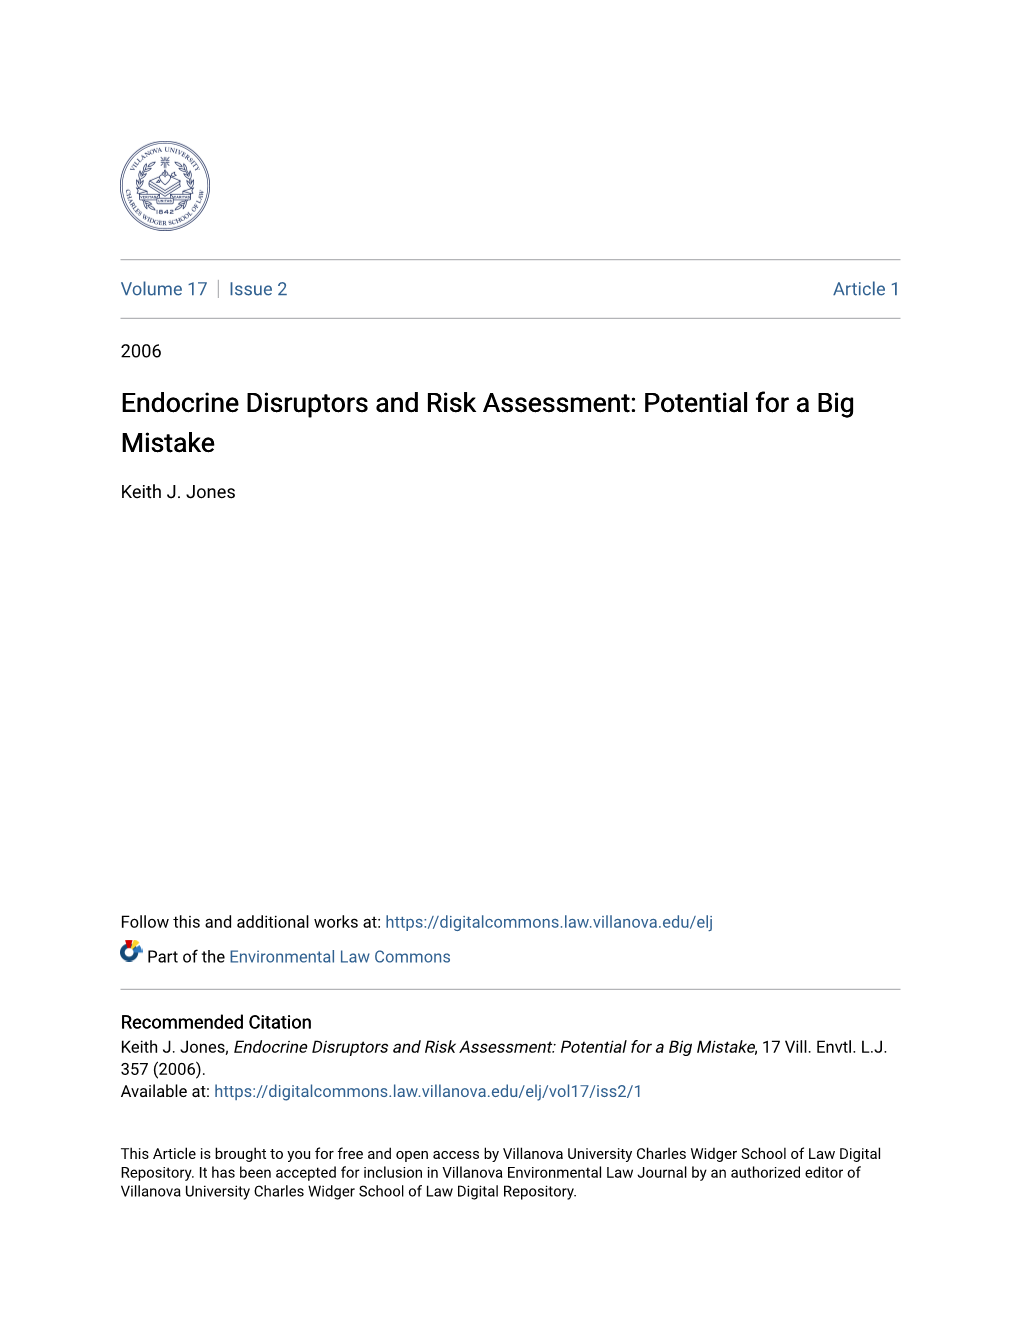 Endocrine Disruptors and Risk Assessment: Potential for a Big Mistake